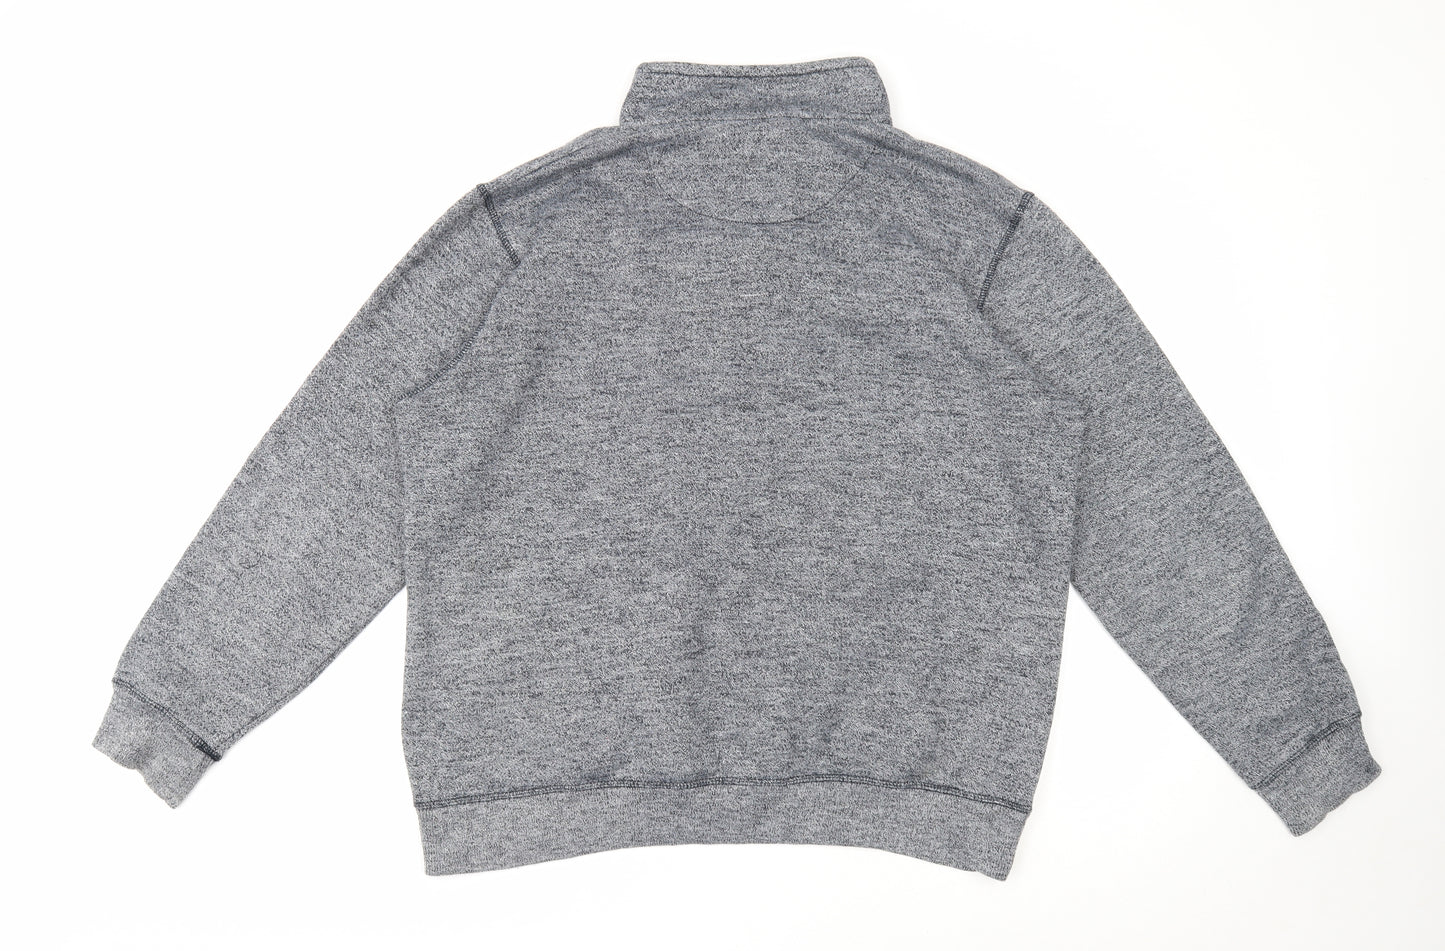 BHS Mens Grey Cotton Pullover Sweatshirt Size L